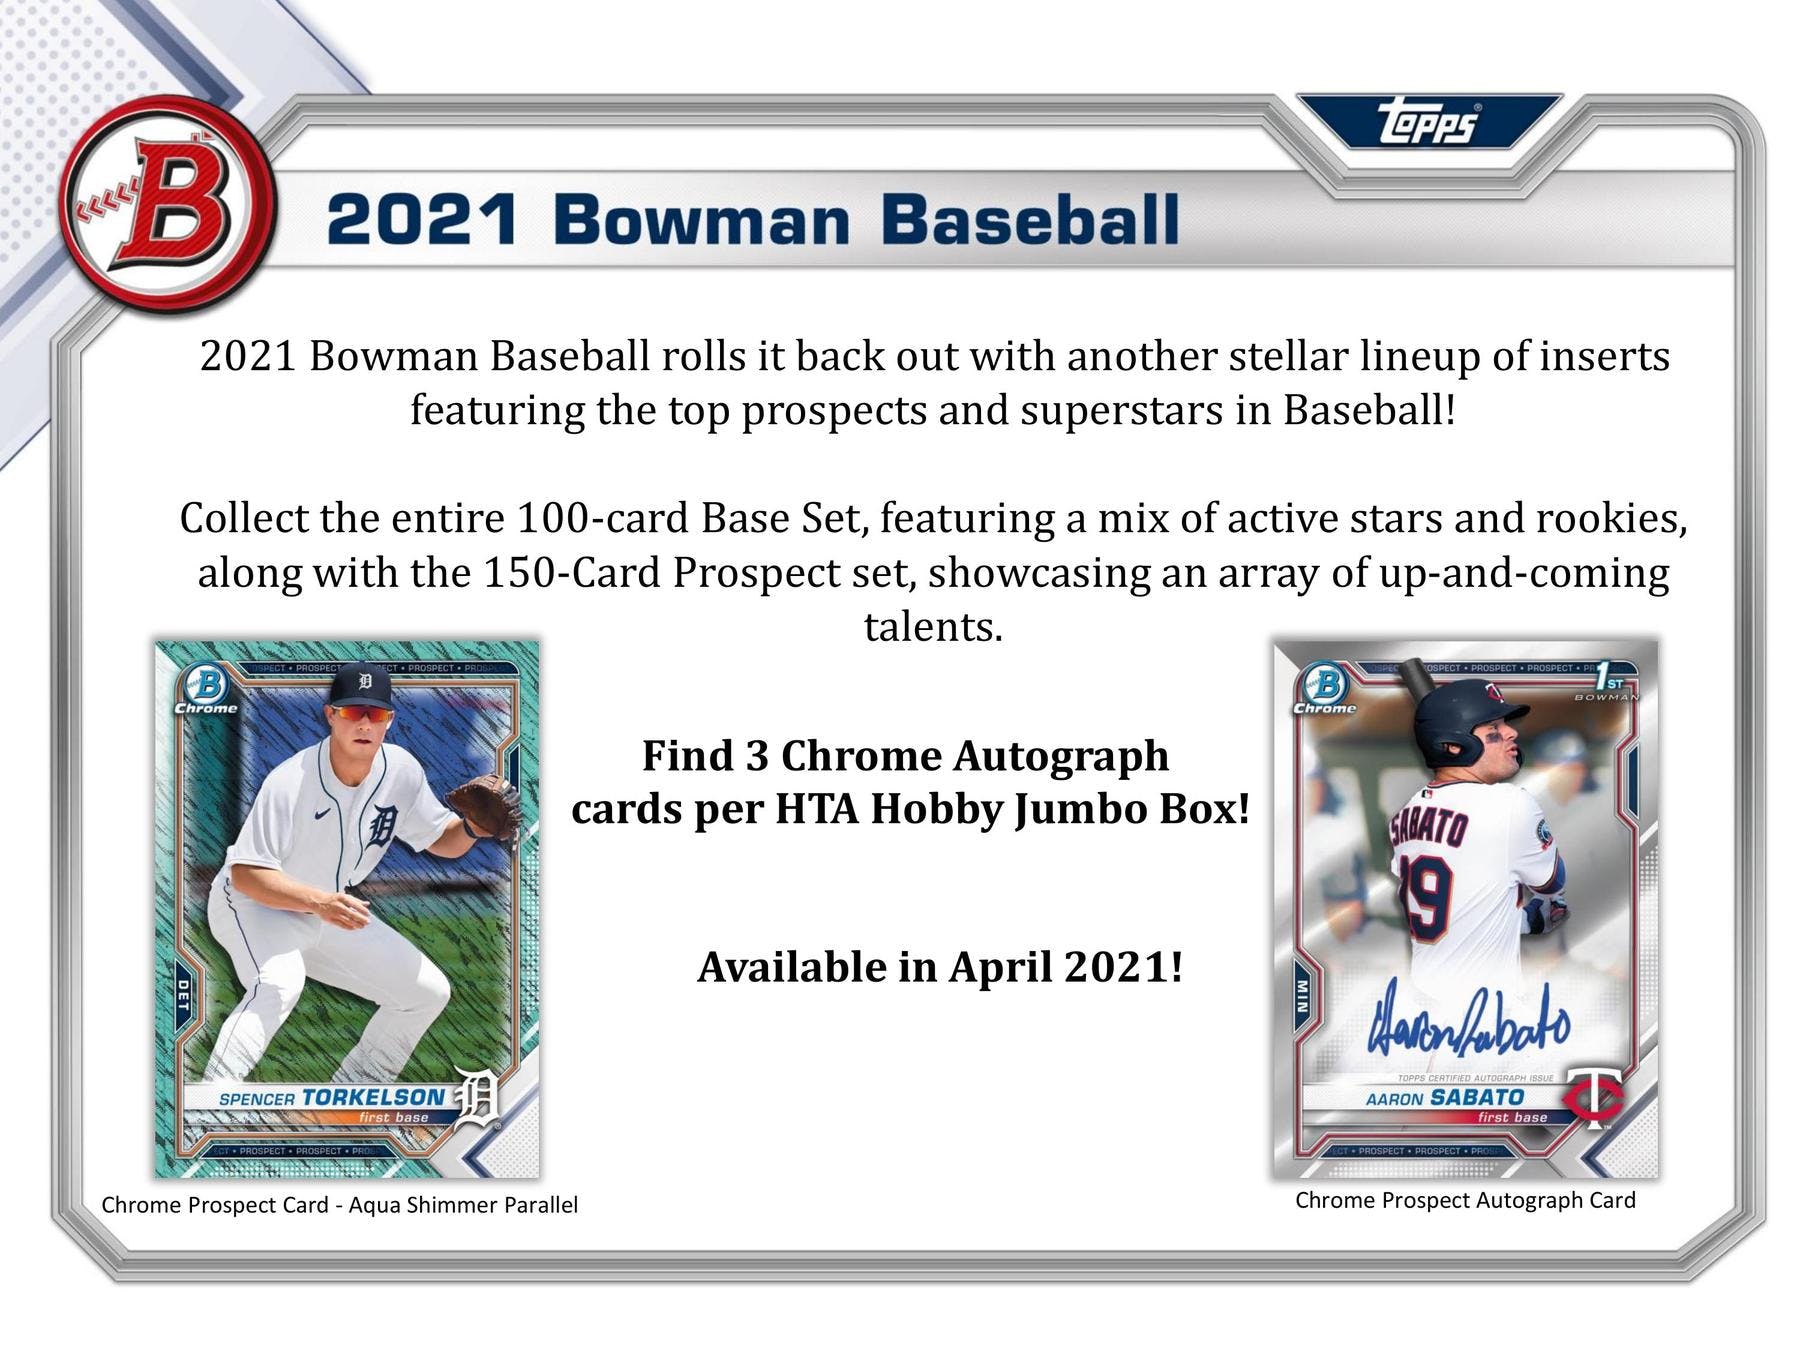 2021 BOWMAN MLB BASEBALL JUMBO HOBBY BOX SINGLE PACKS